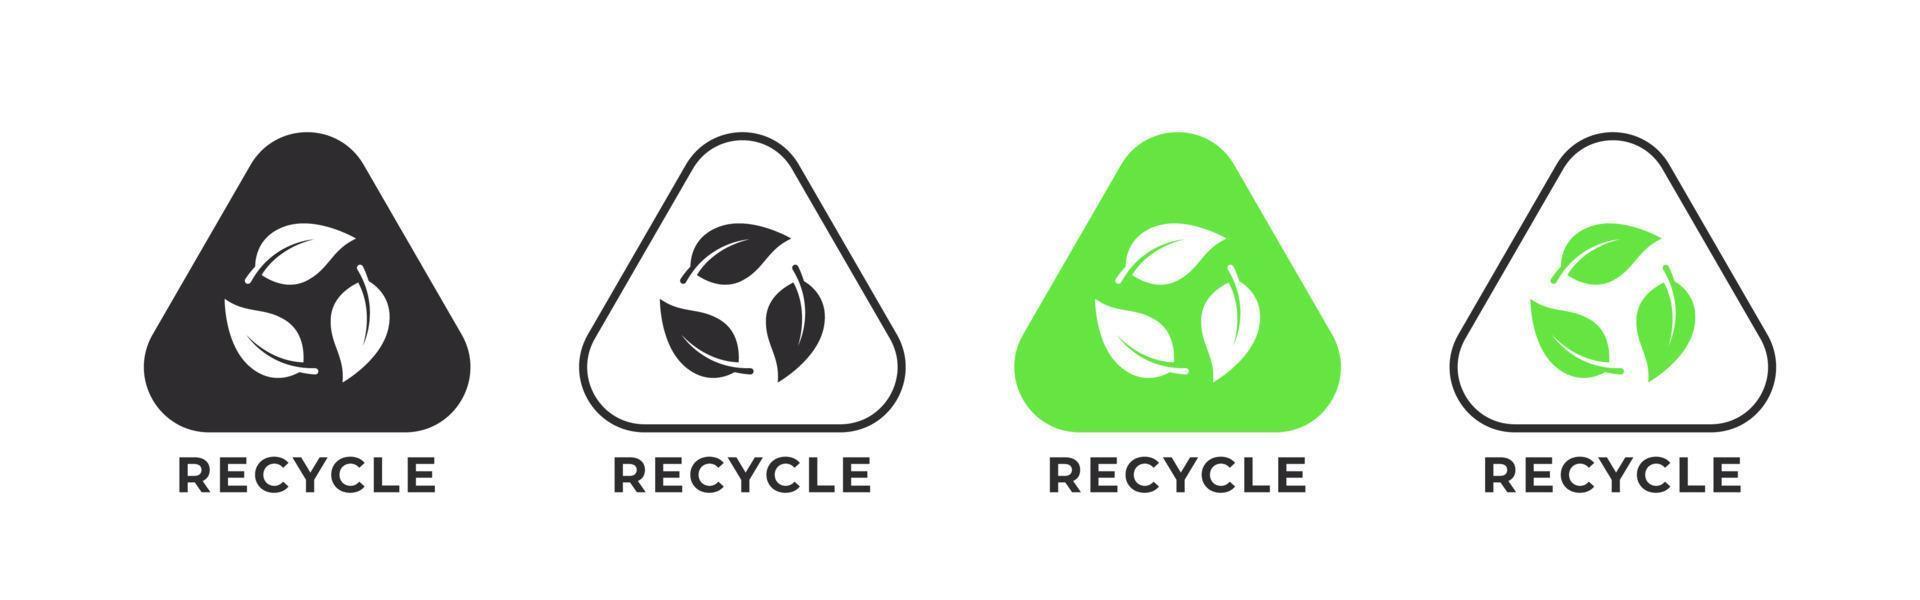 Ikonen des Recyclings. aus recycelten Materialien hergestellt. Verpackung und Recycling. Vektor-Illustration vektor